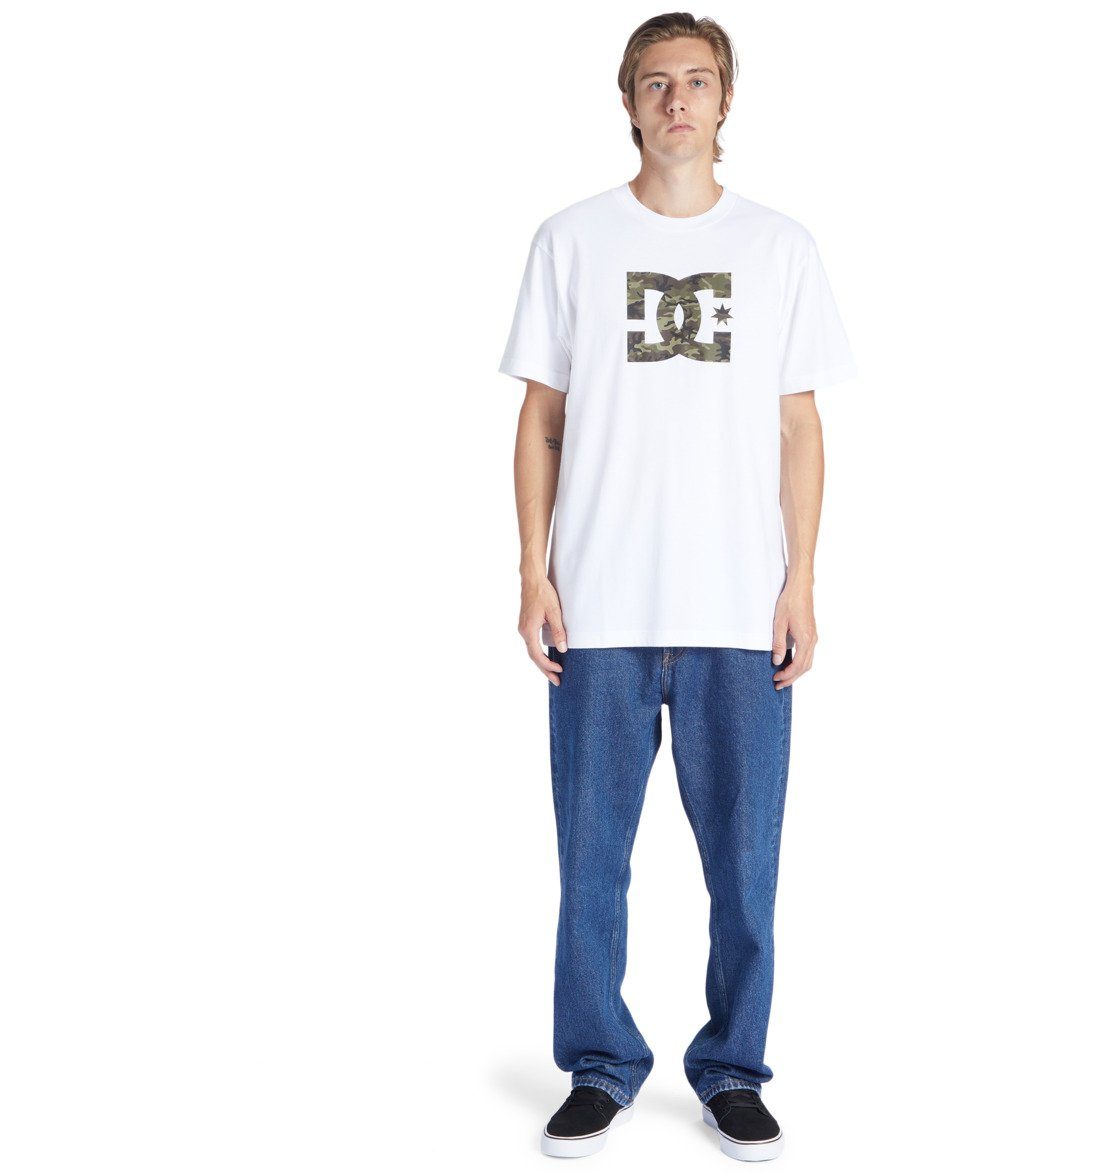 Fill Shoes DC DC T-Shirt Star White/Camo